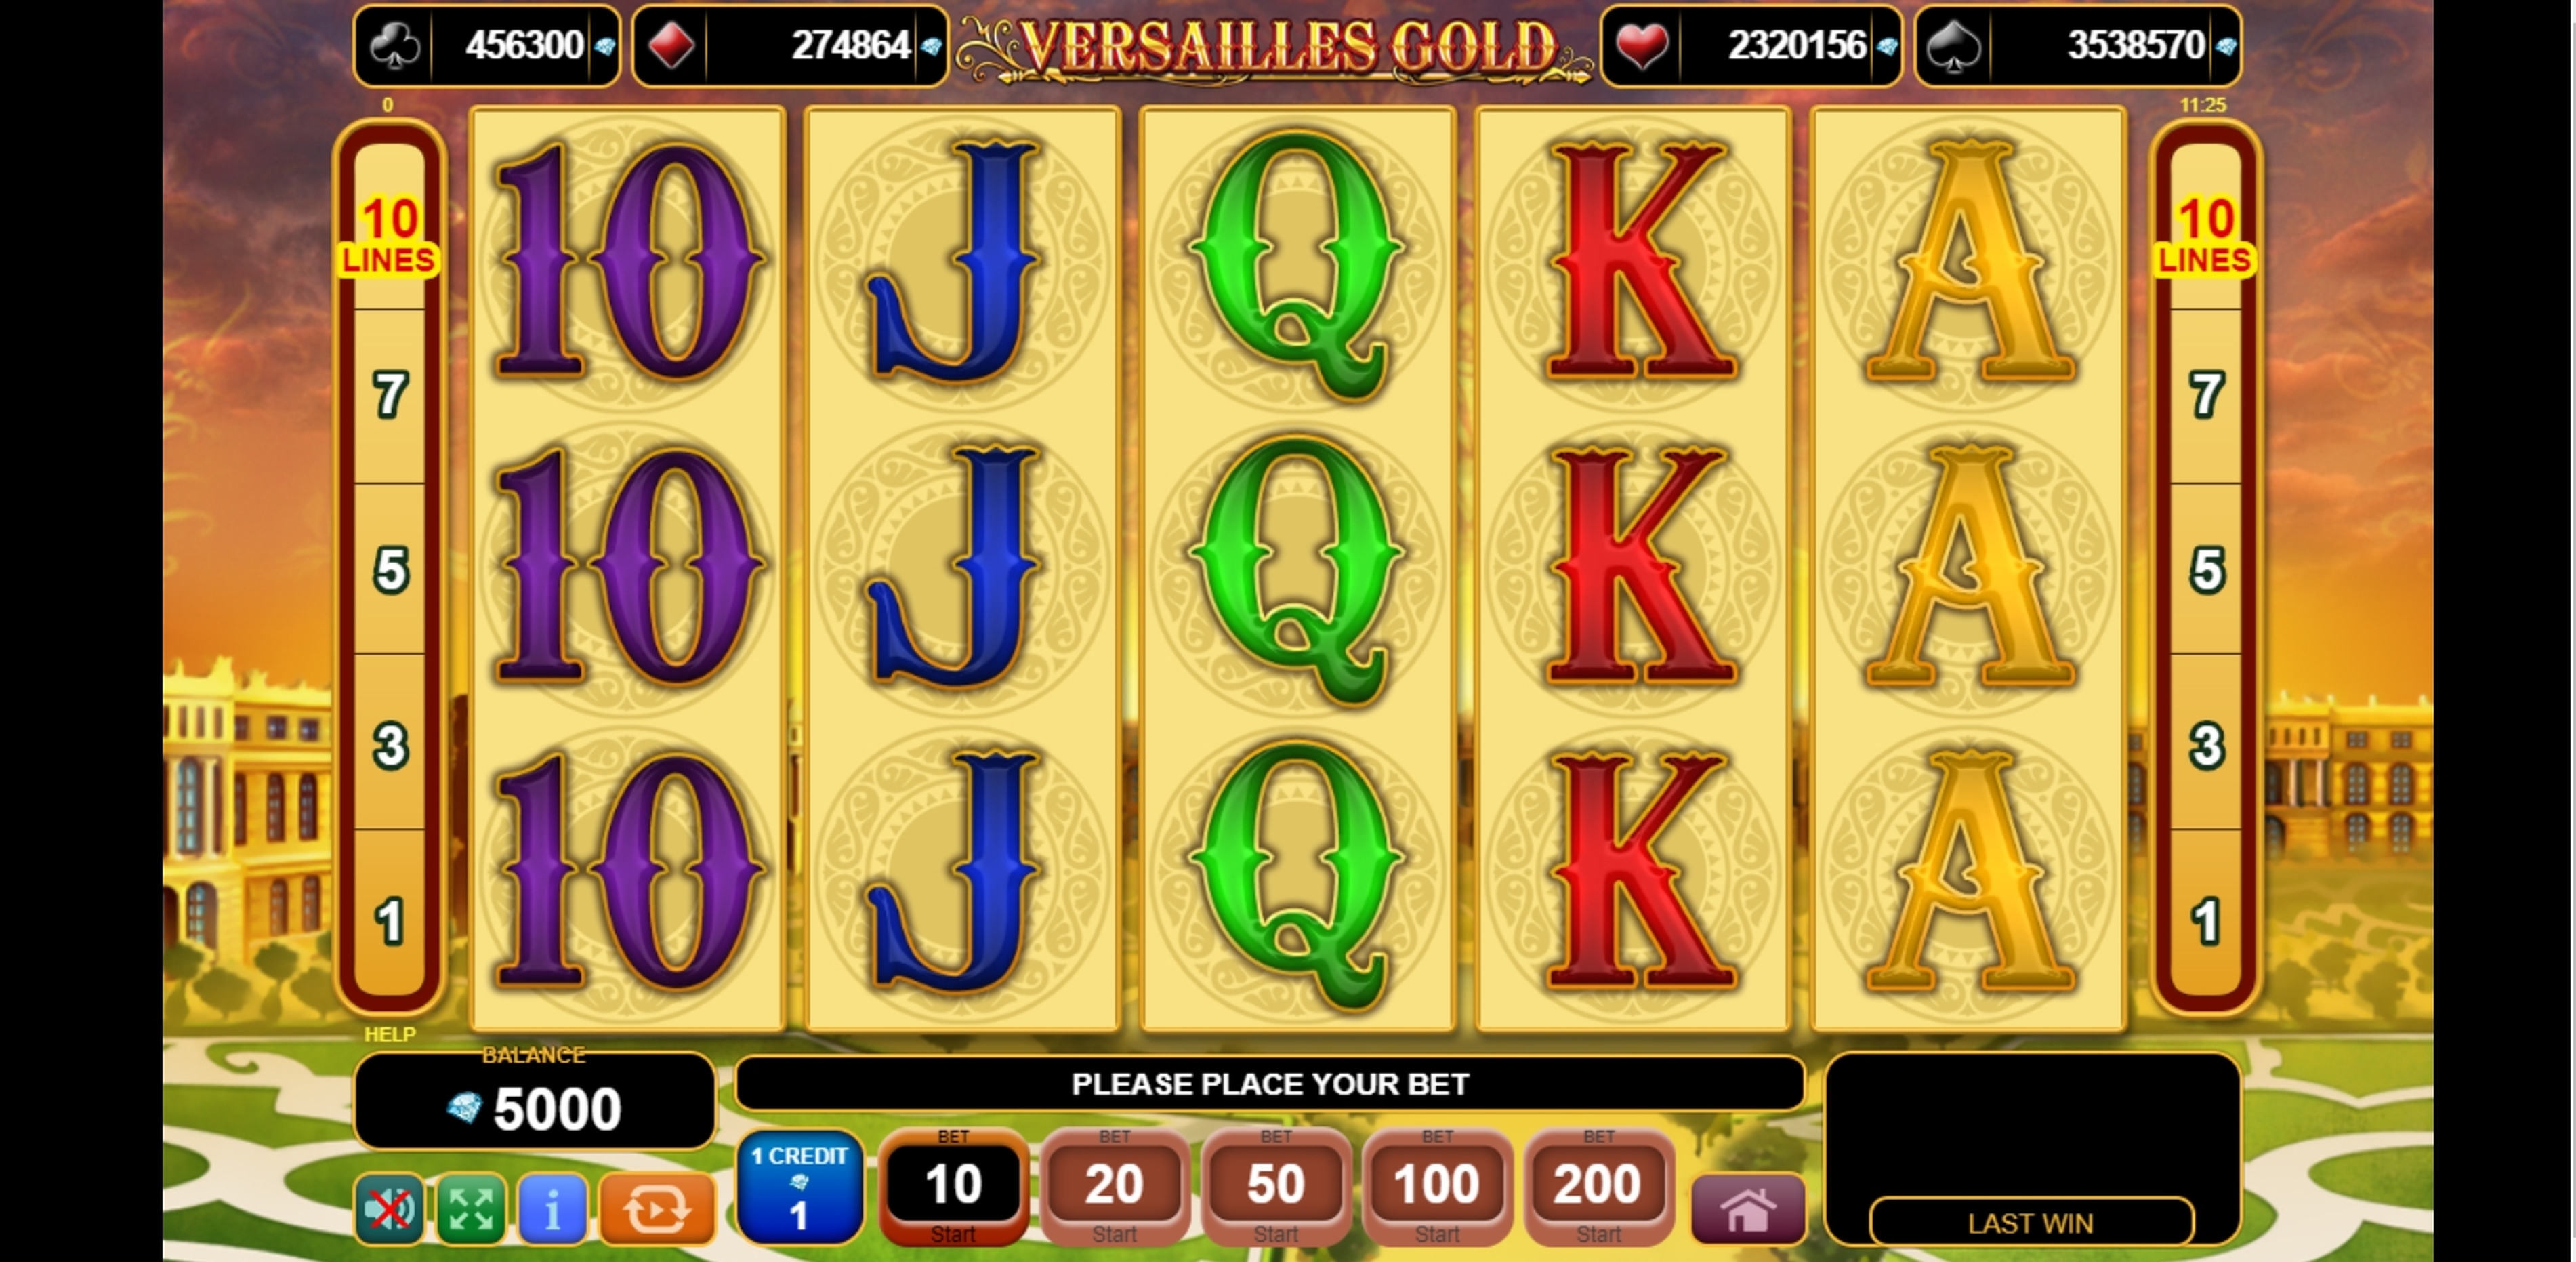 Reels in Versailles Gold Slot Game by EGT